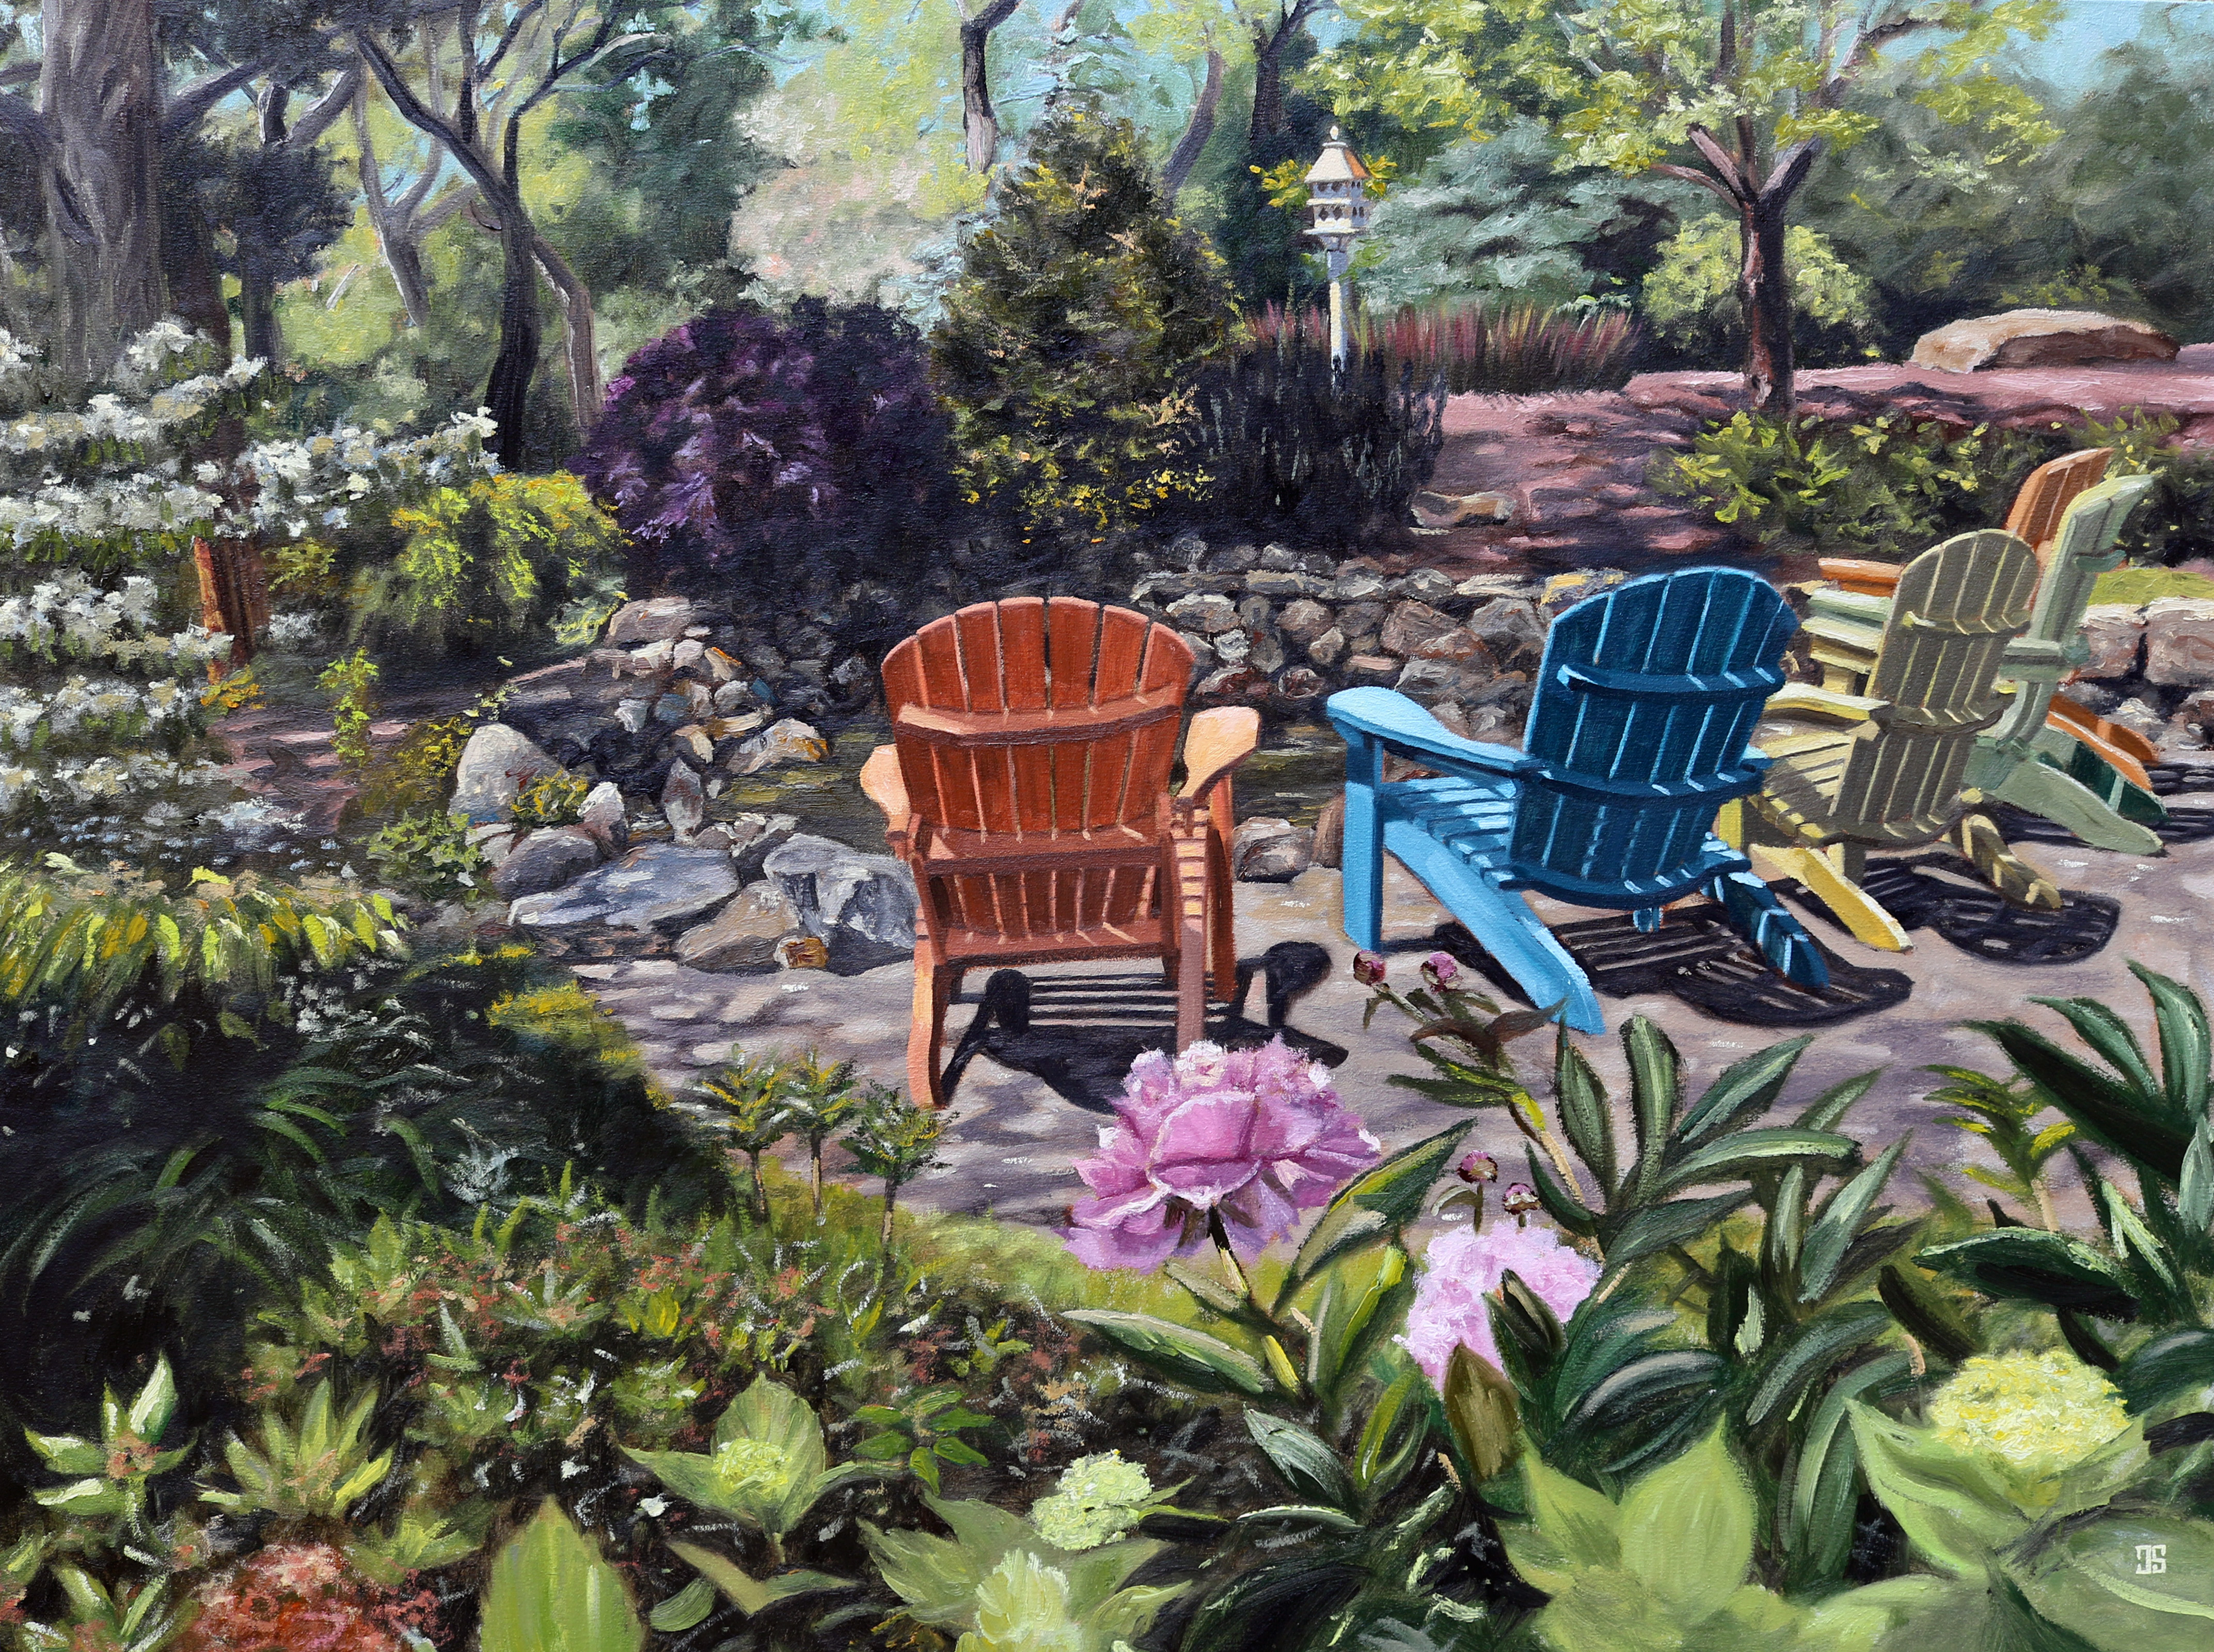 Oil painting "The Garden of Nancy Boccia" by Jeffrey Dale Starr